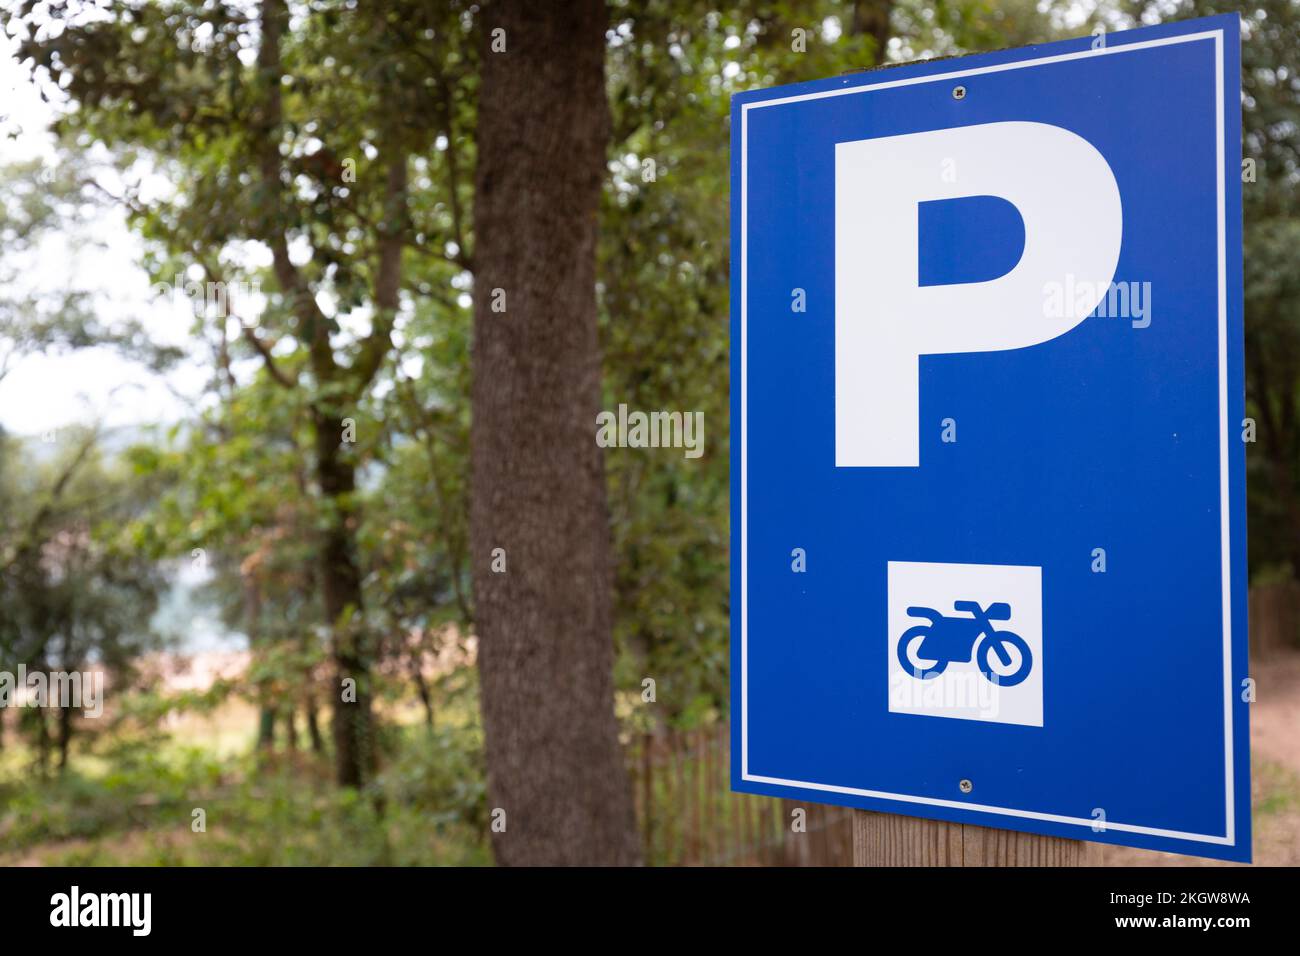 Motorbike (motorcycle) parking sign Stock Photo